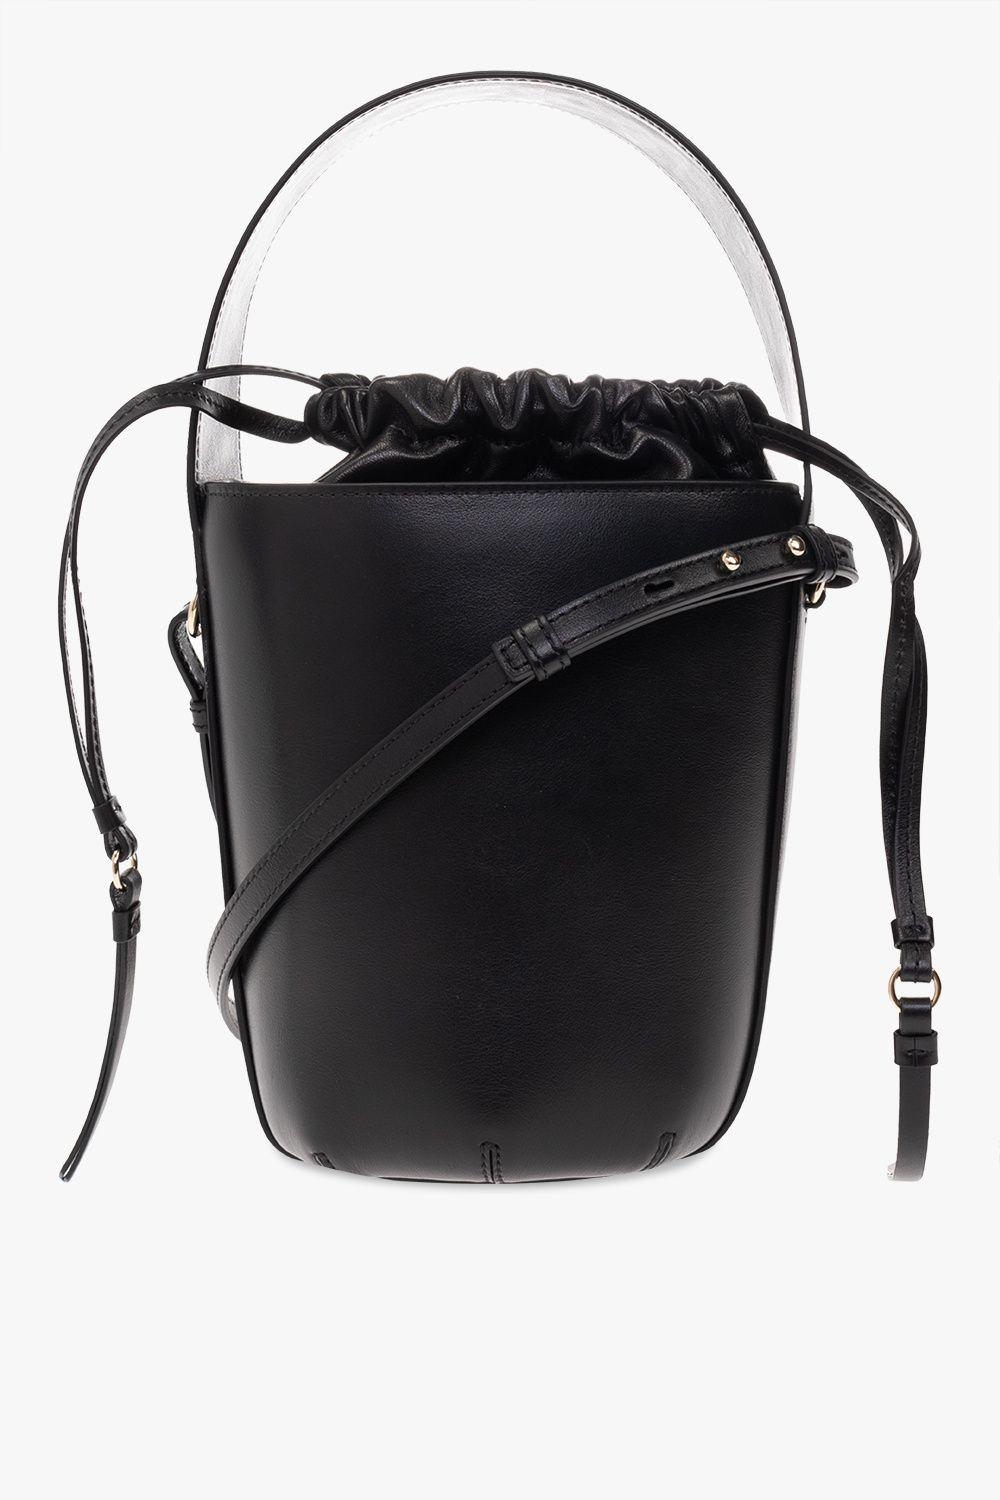 Chloé ' Sense' Bucket Bag in Black | Lyst